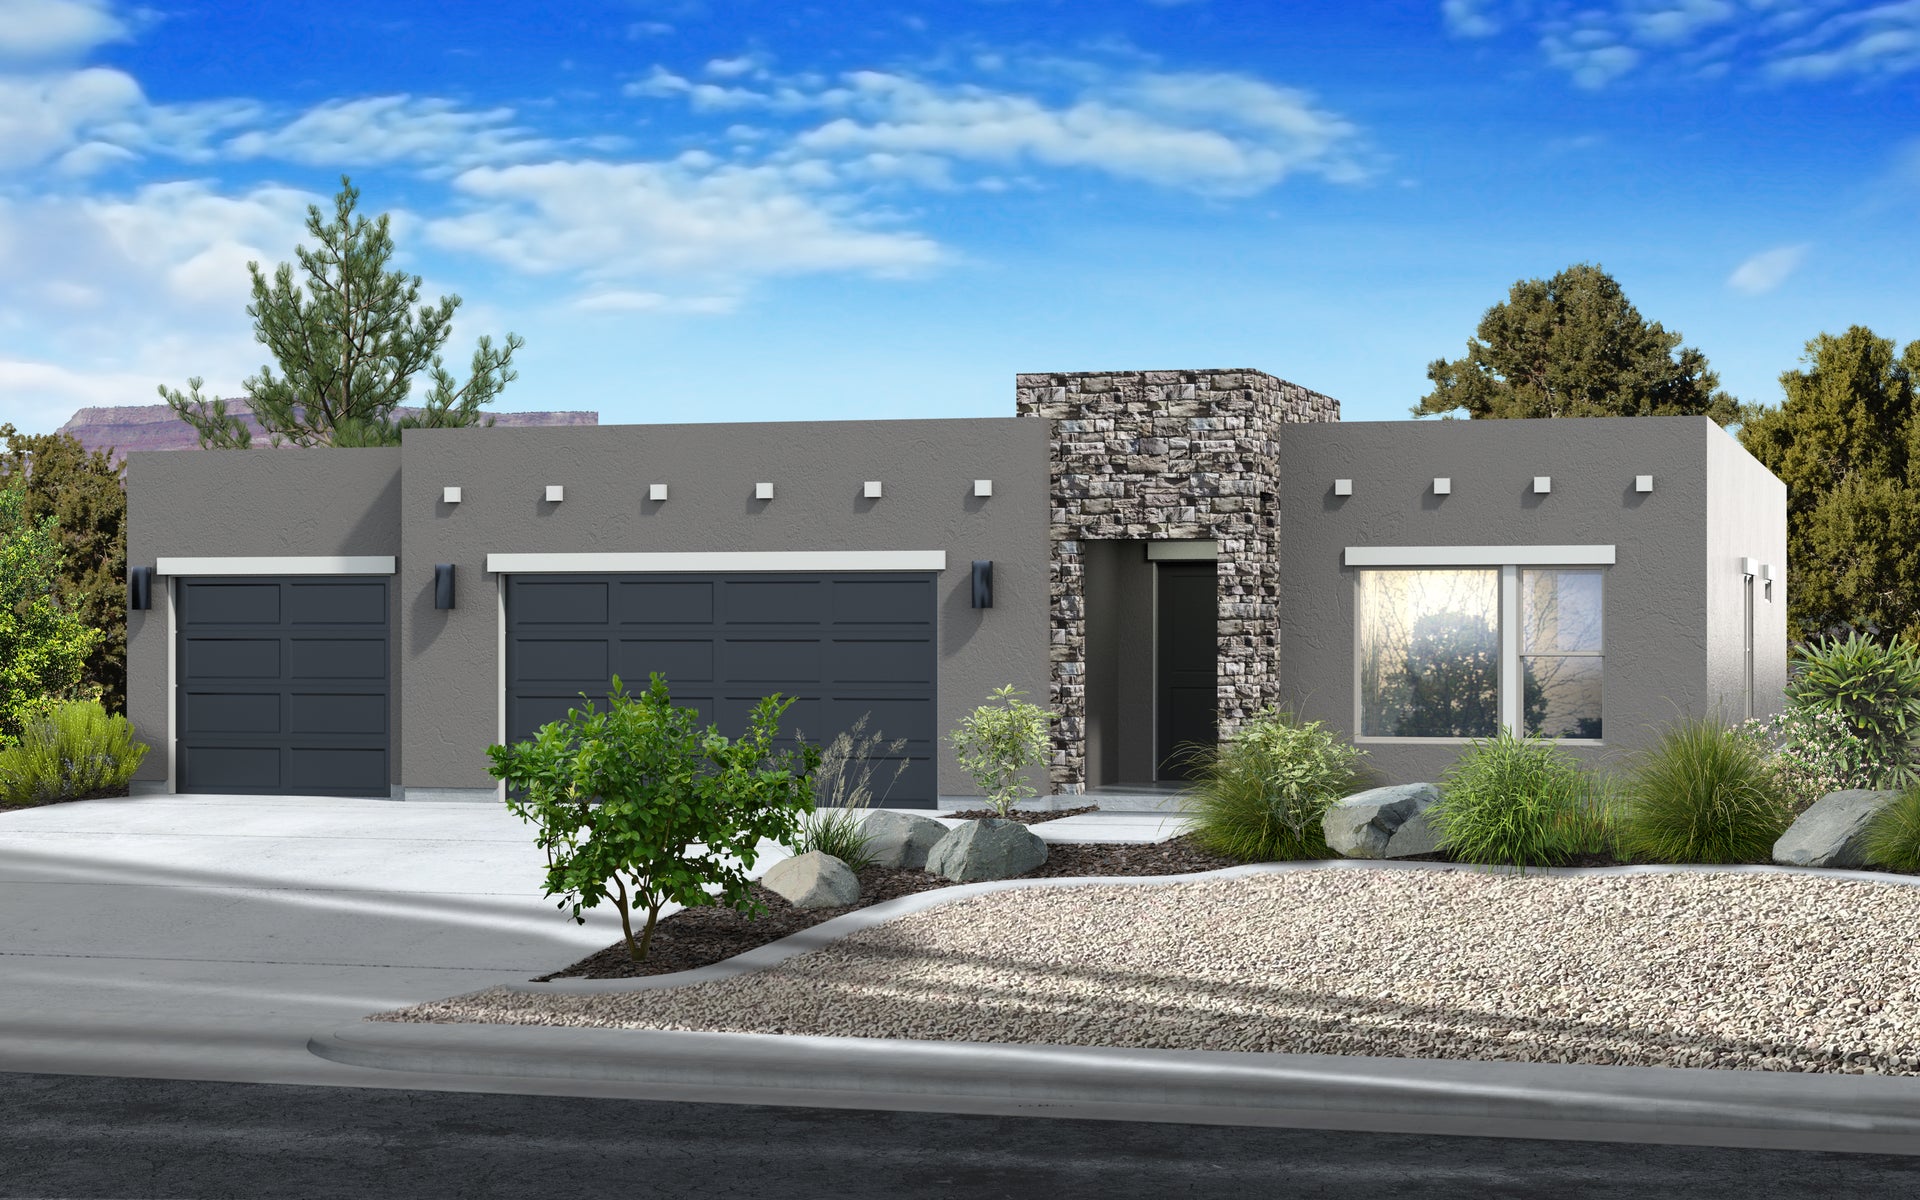 The Bluemont Desert Contemporary new home floorplan in Utah